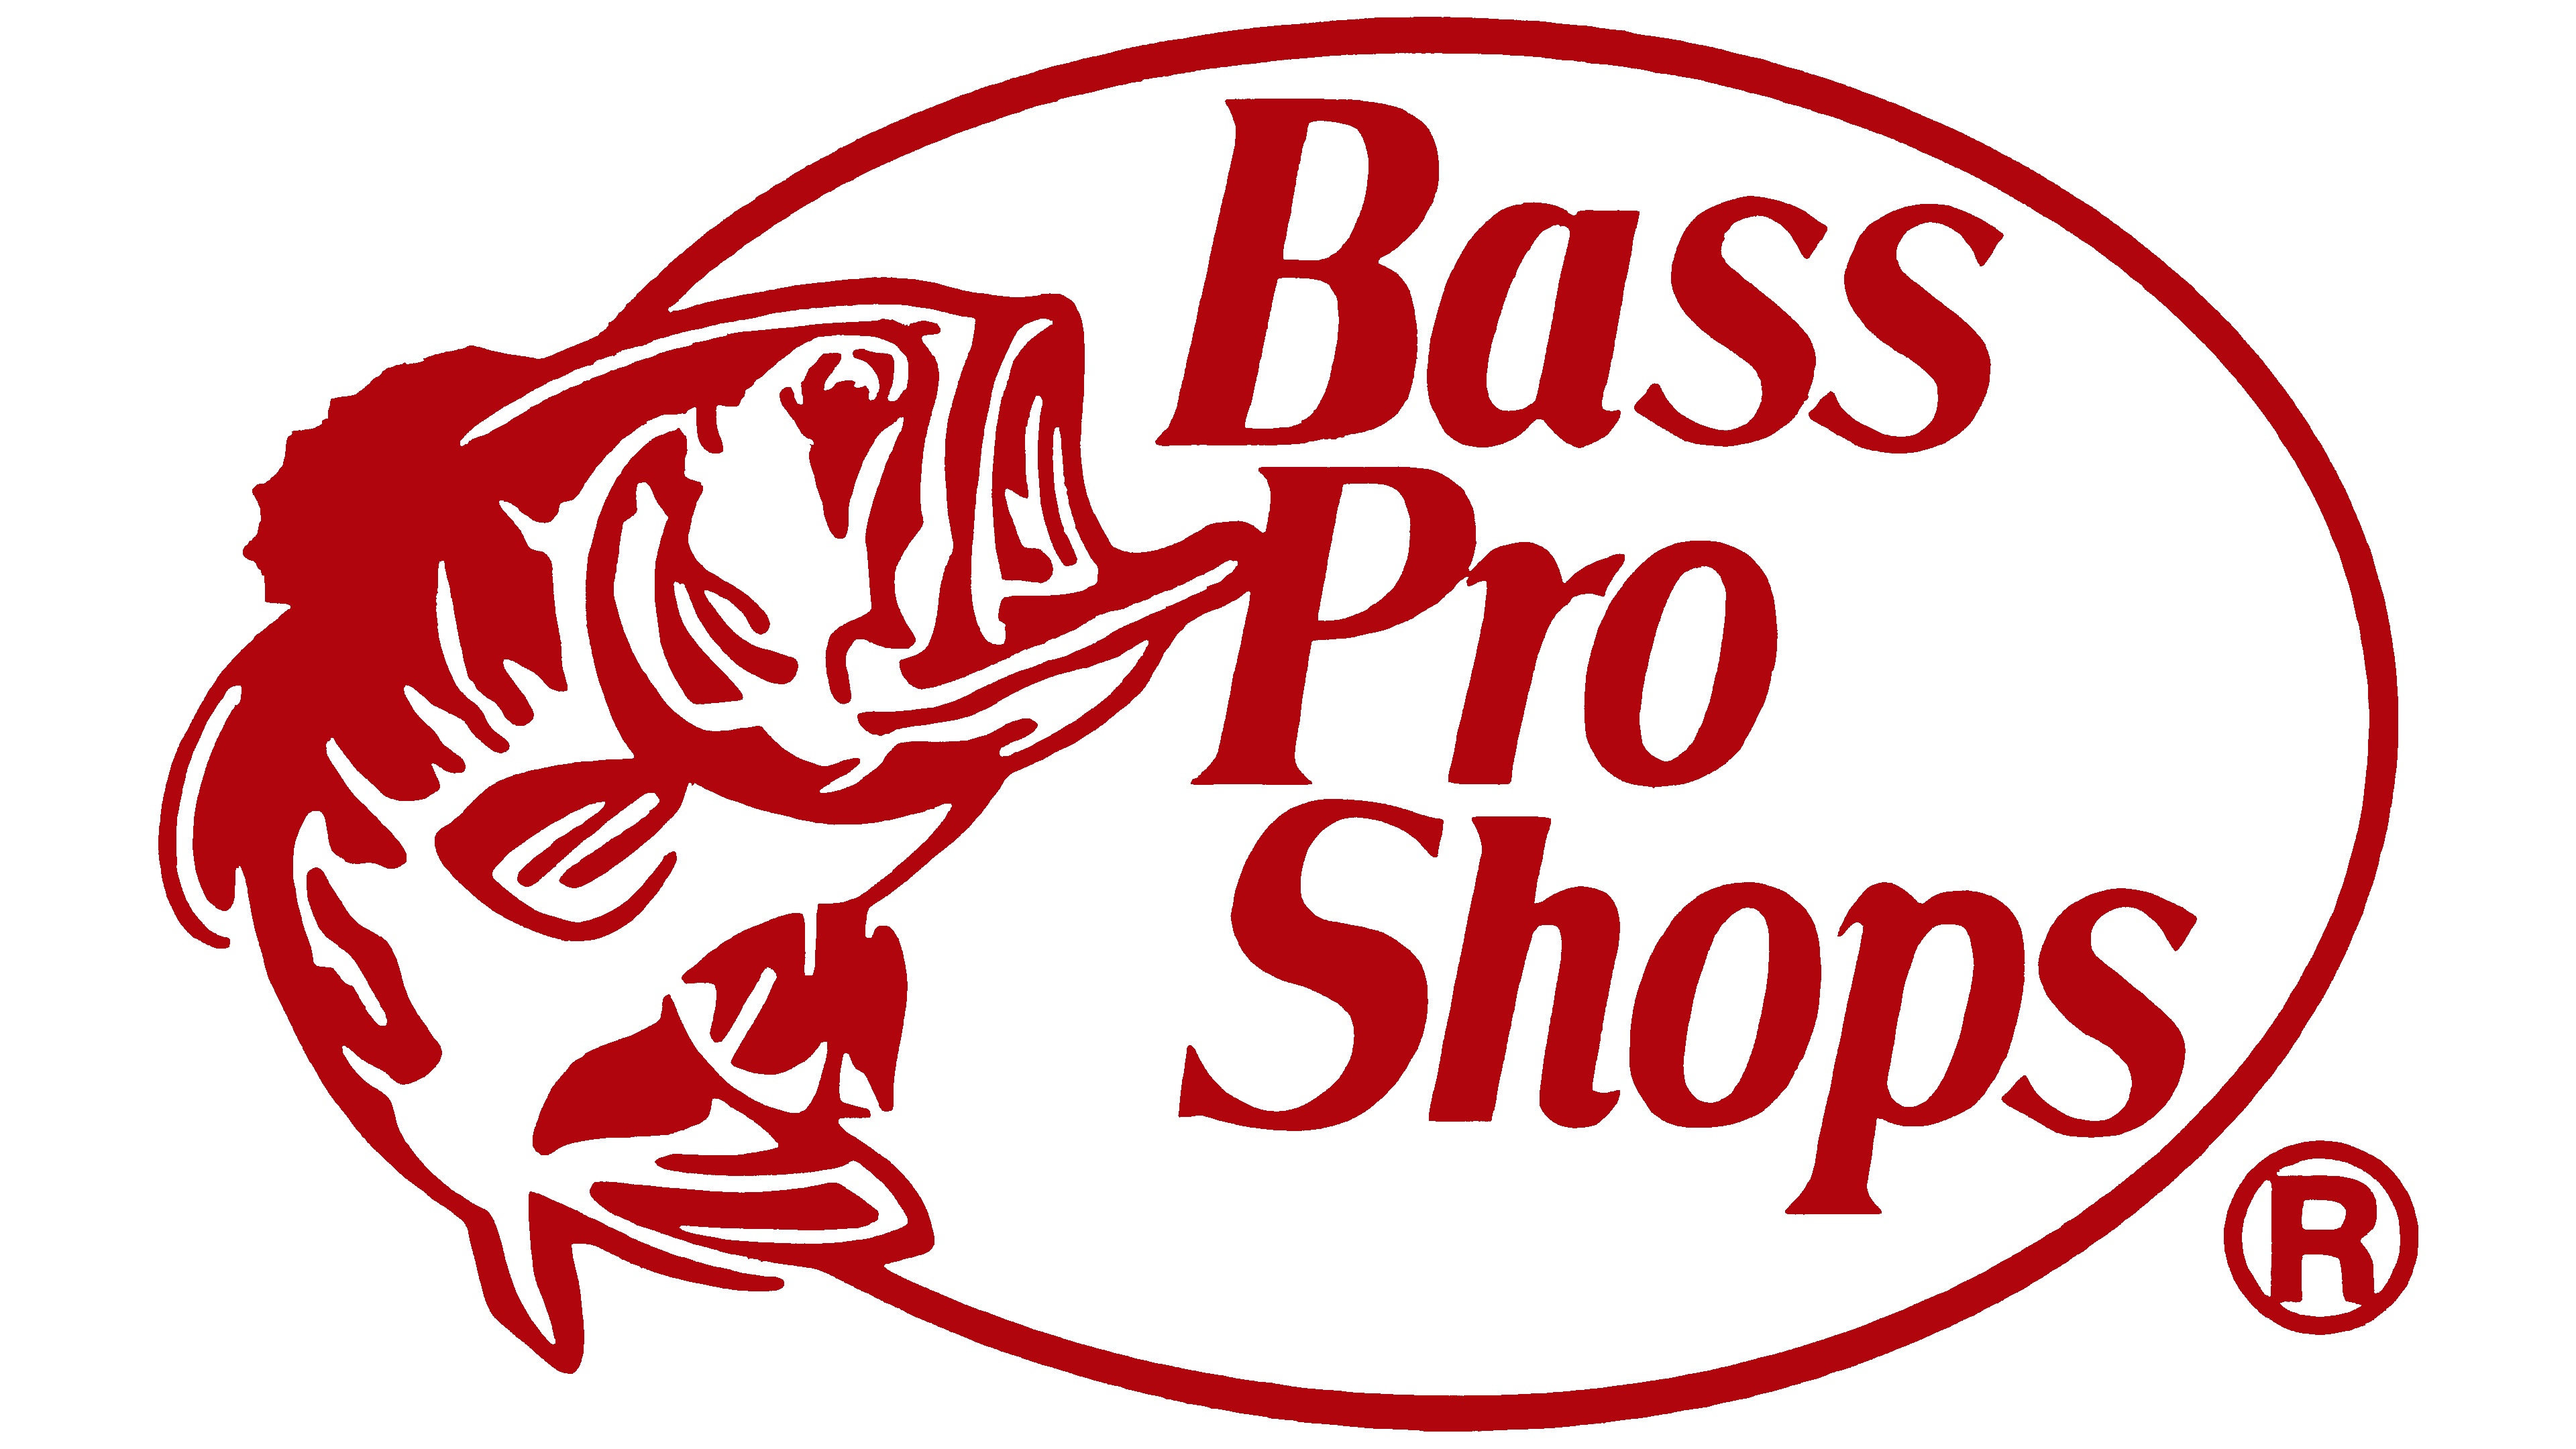 Pro shop 2. Bass Pro shops logo. Магазины Bass Pro shop. Bass co логотип. Bass Pro shops футболка.